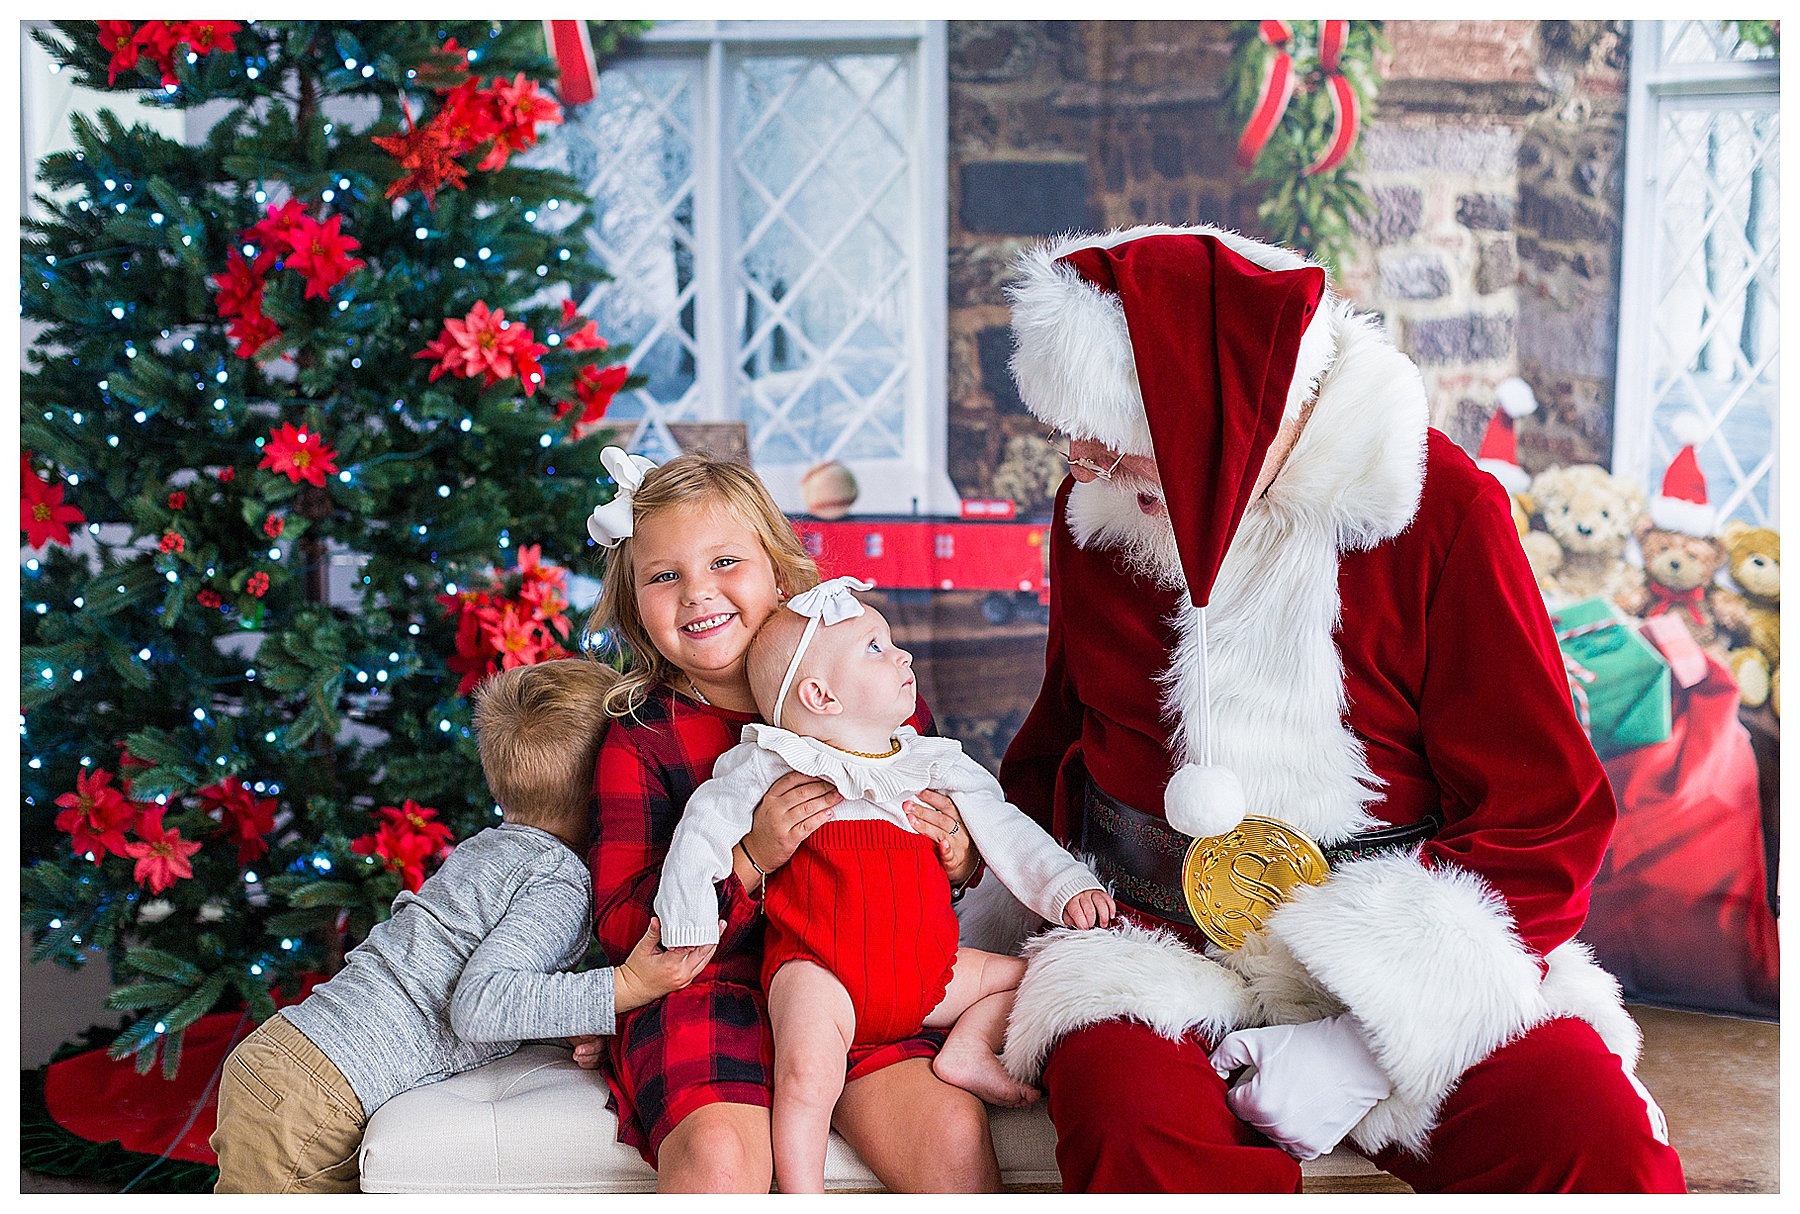 Santa with three small children